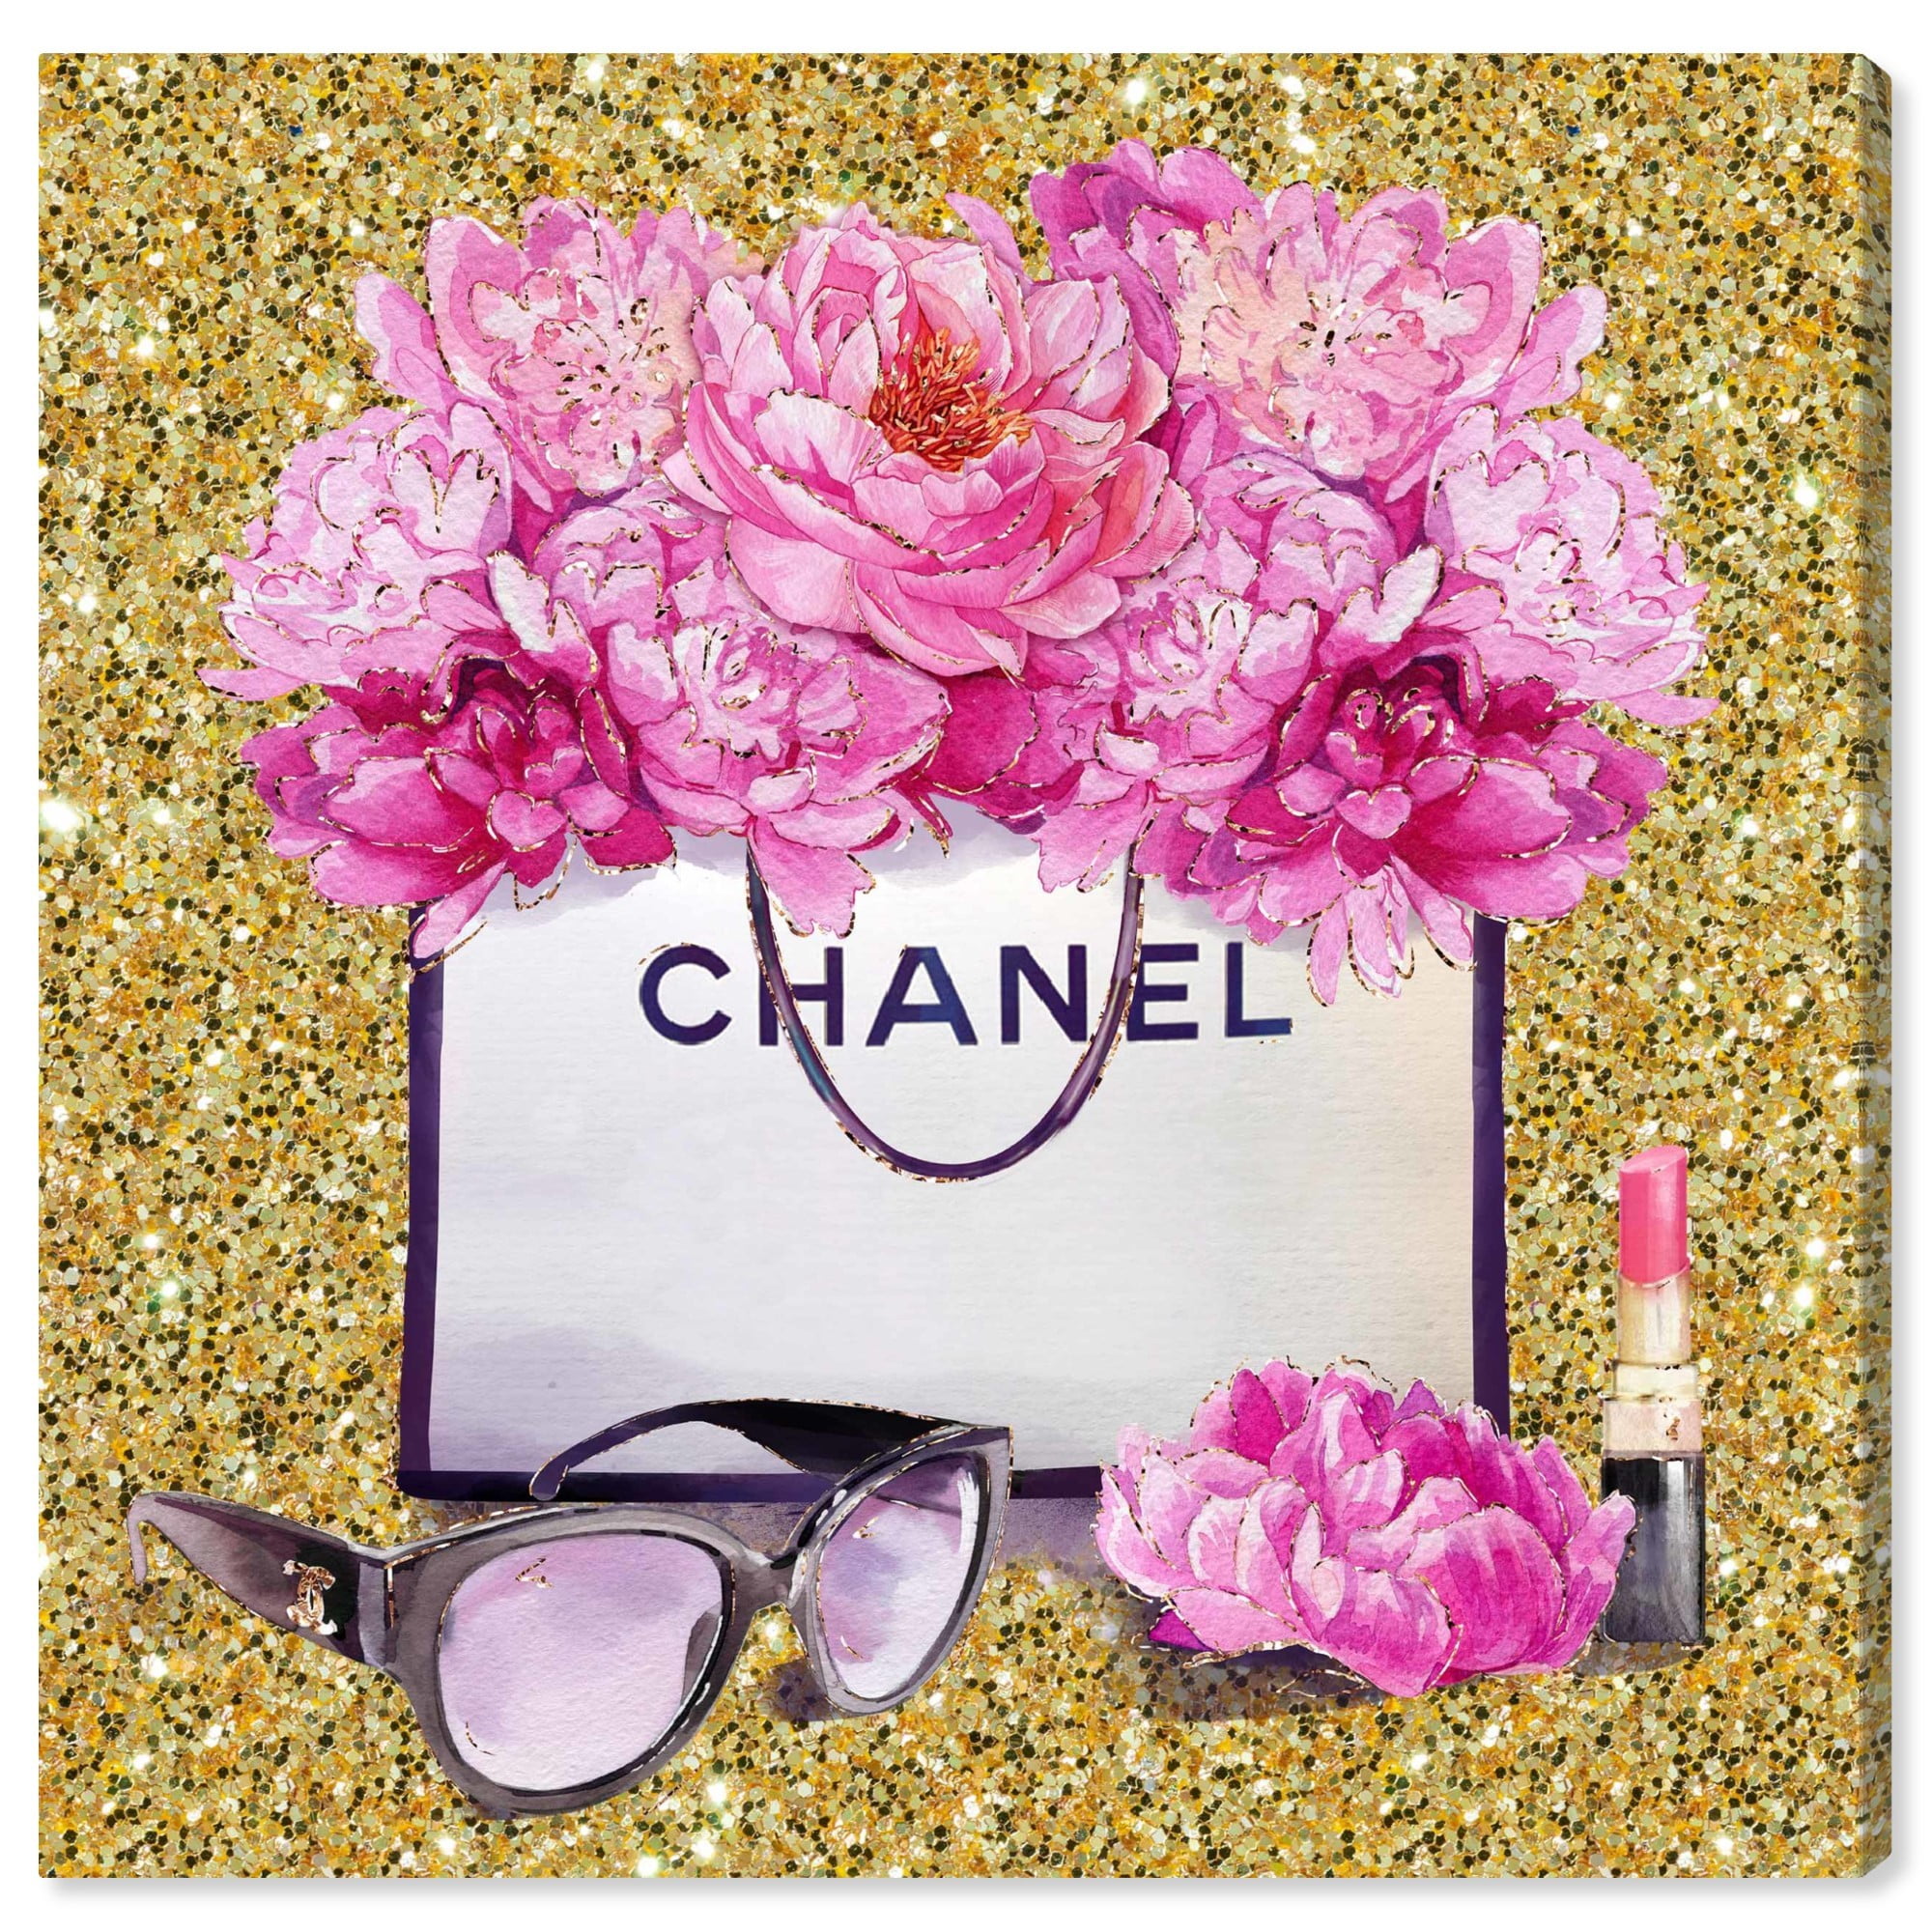 Chanel Glitter Perfume Canvas Artwork by Martina Pavlova  iCanvas